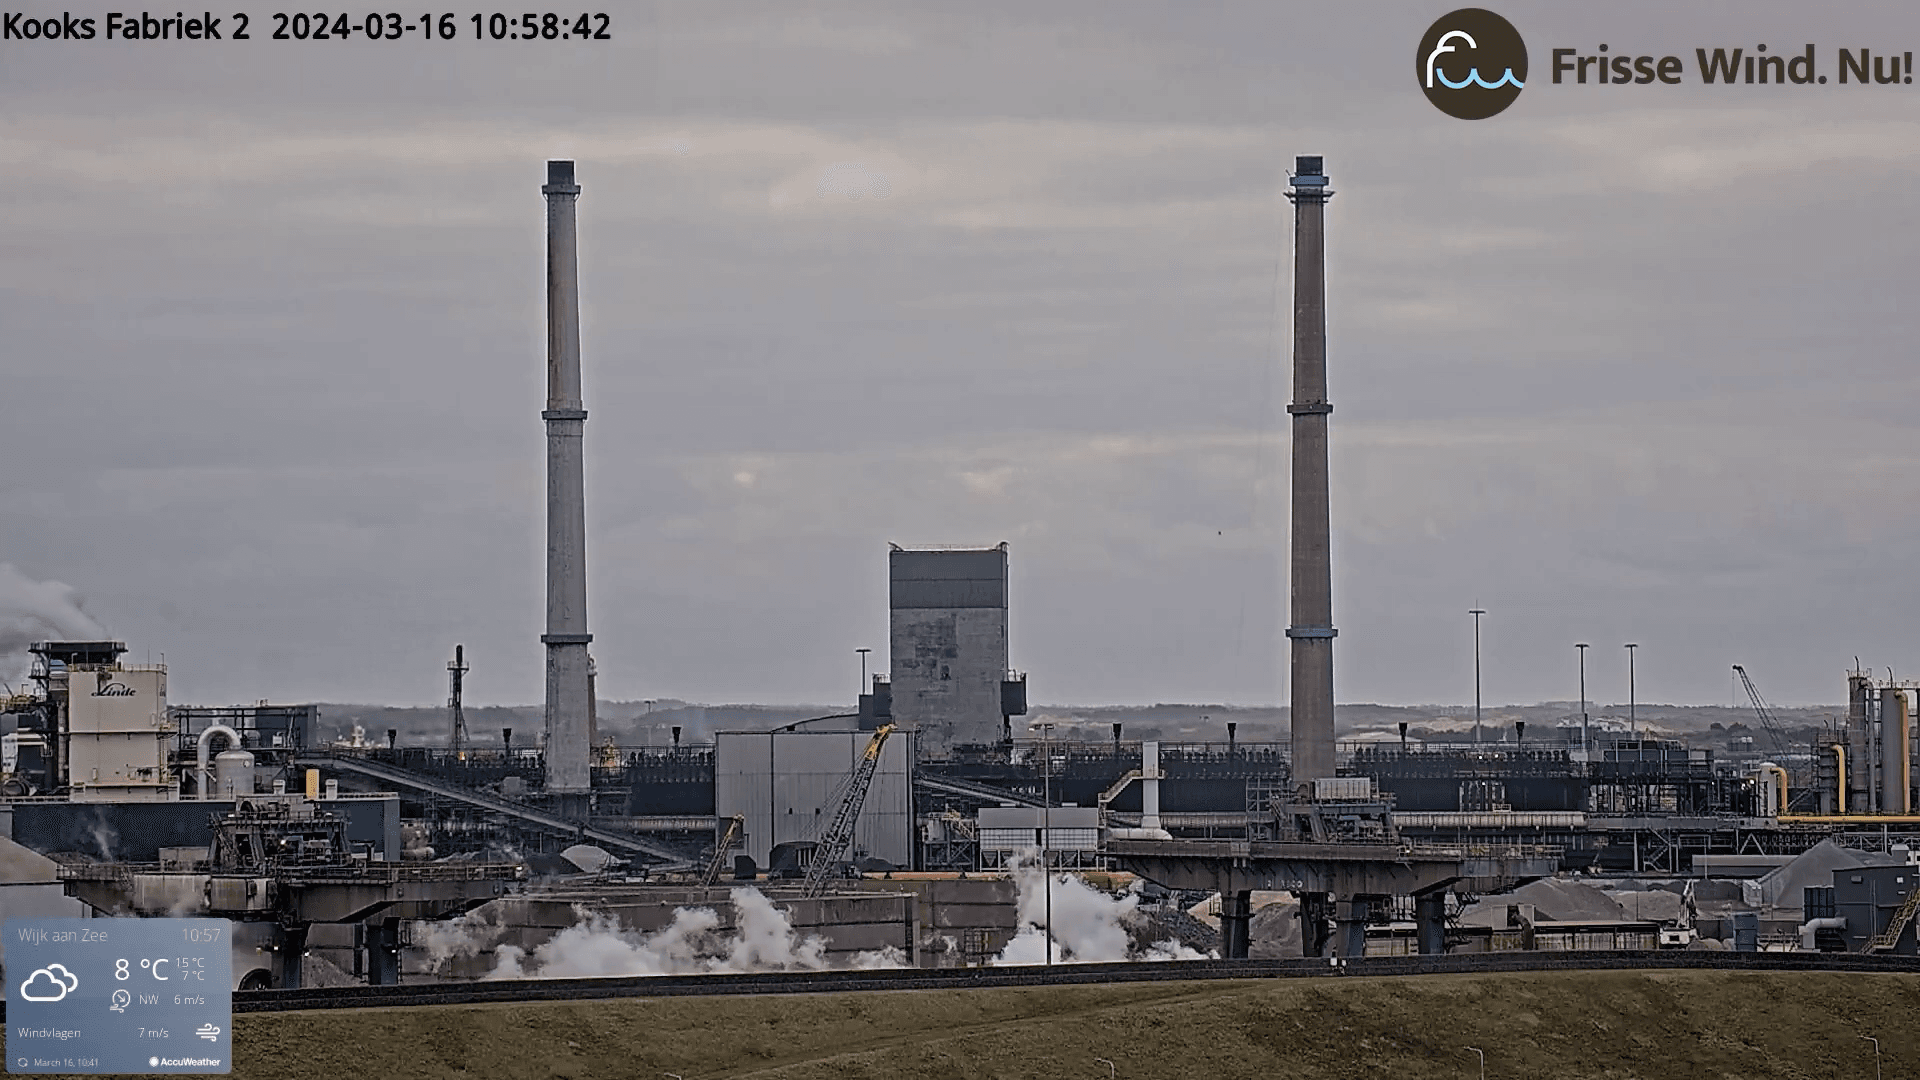 Incineration, Kooks Fabriek 2 https://www.youtube.com/watch?v=MUMJfMaJHtI&ab_channel=FrisseWindNu (4:28)